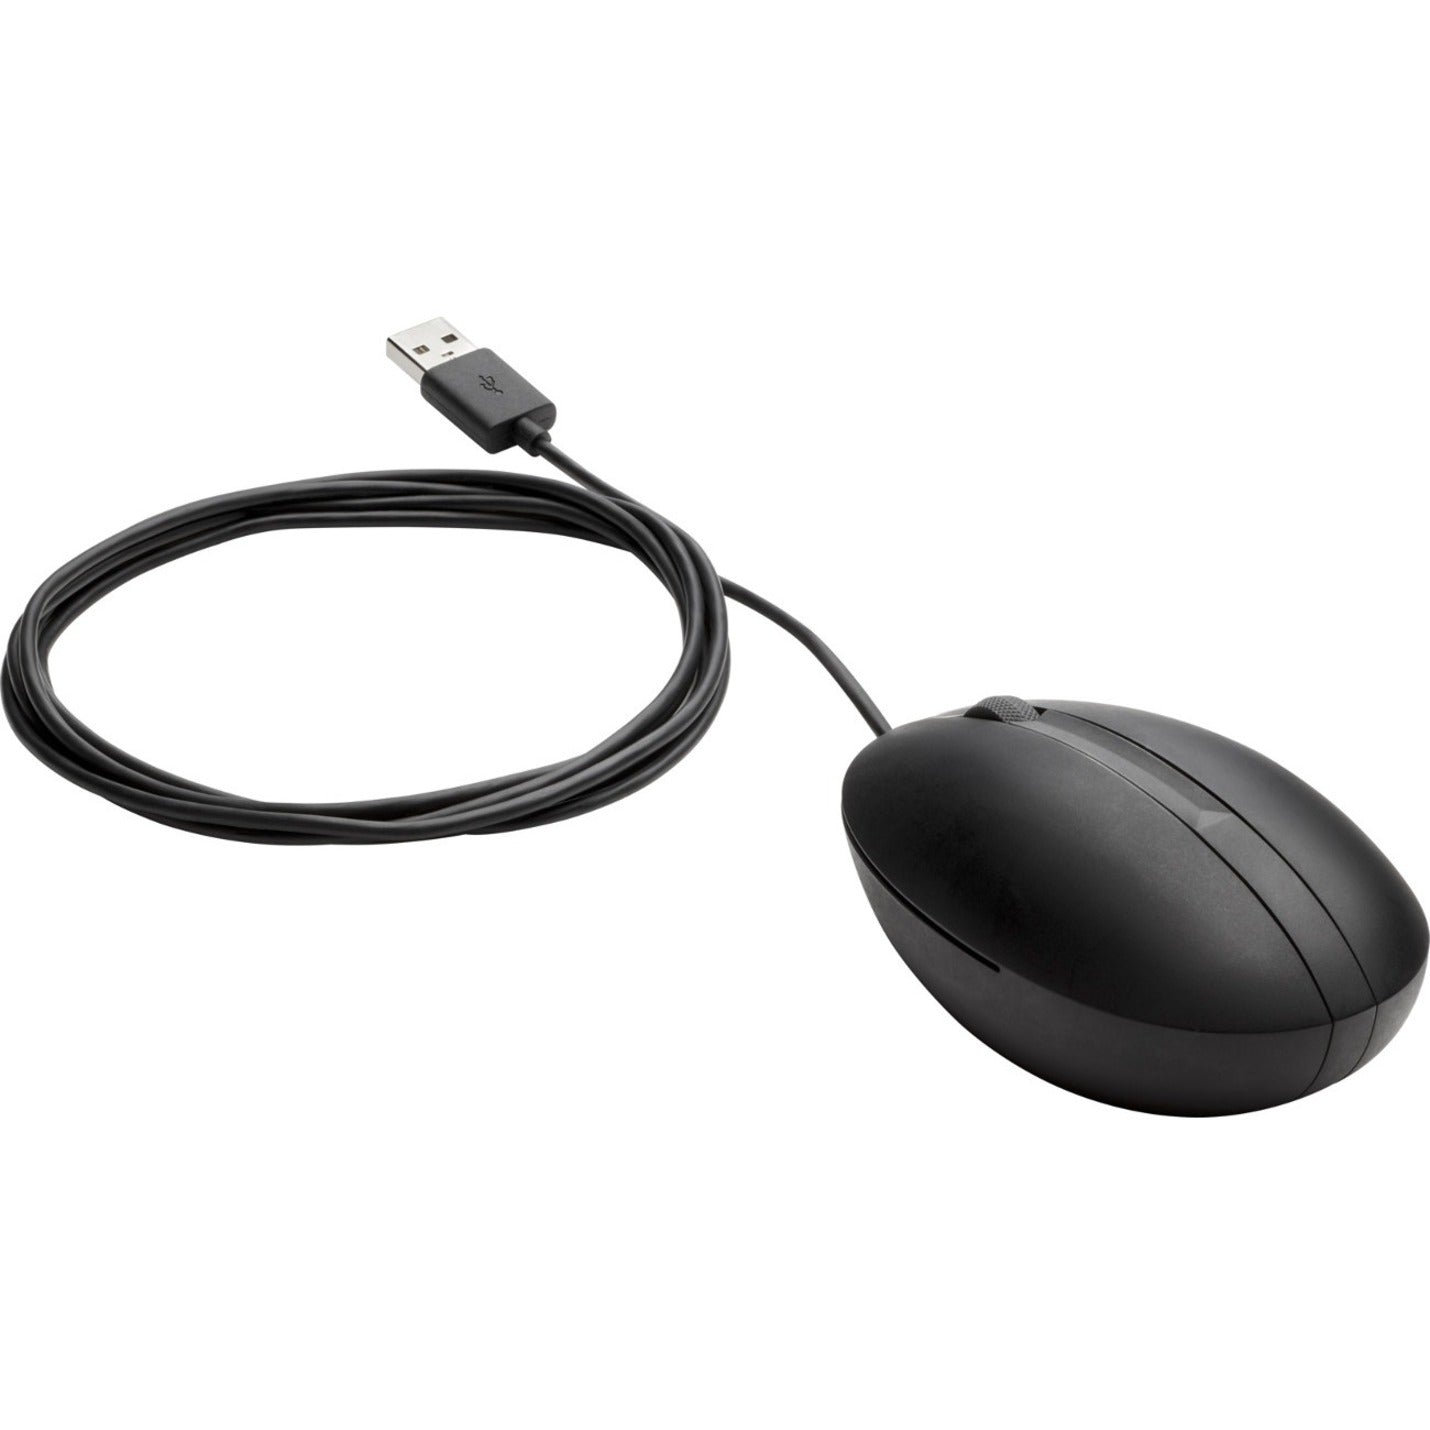 HP Wired Desktop 320M Mouse, Symmetrical Ergonomic Fit, 1000 dpi Optical, USB Connectivity